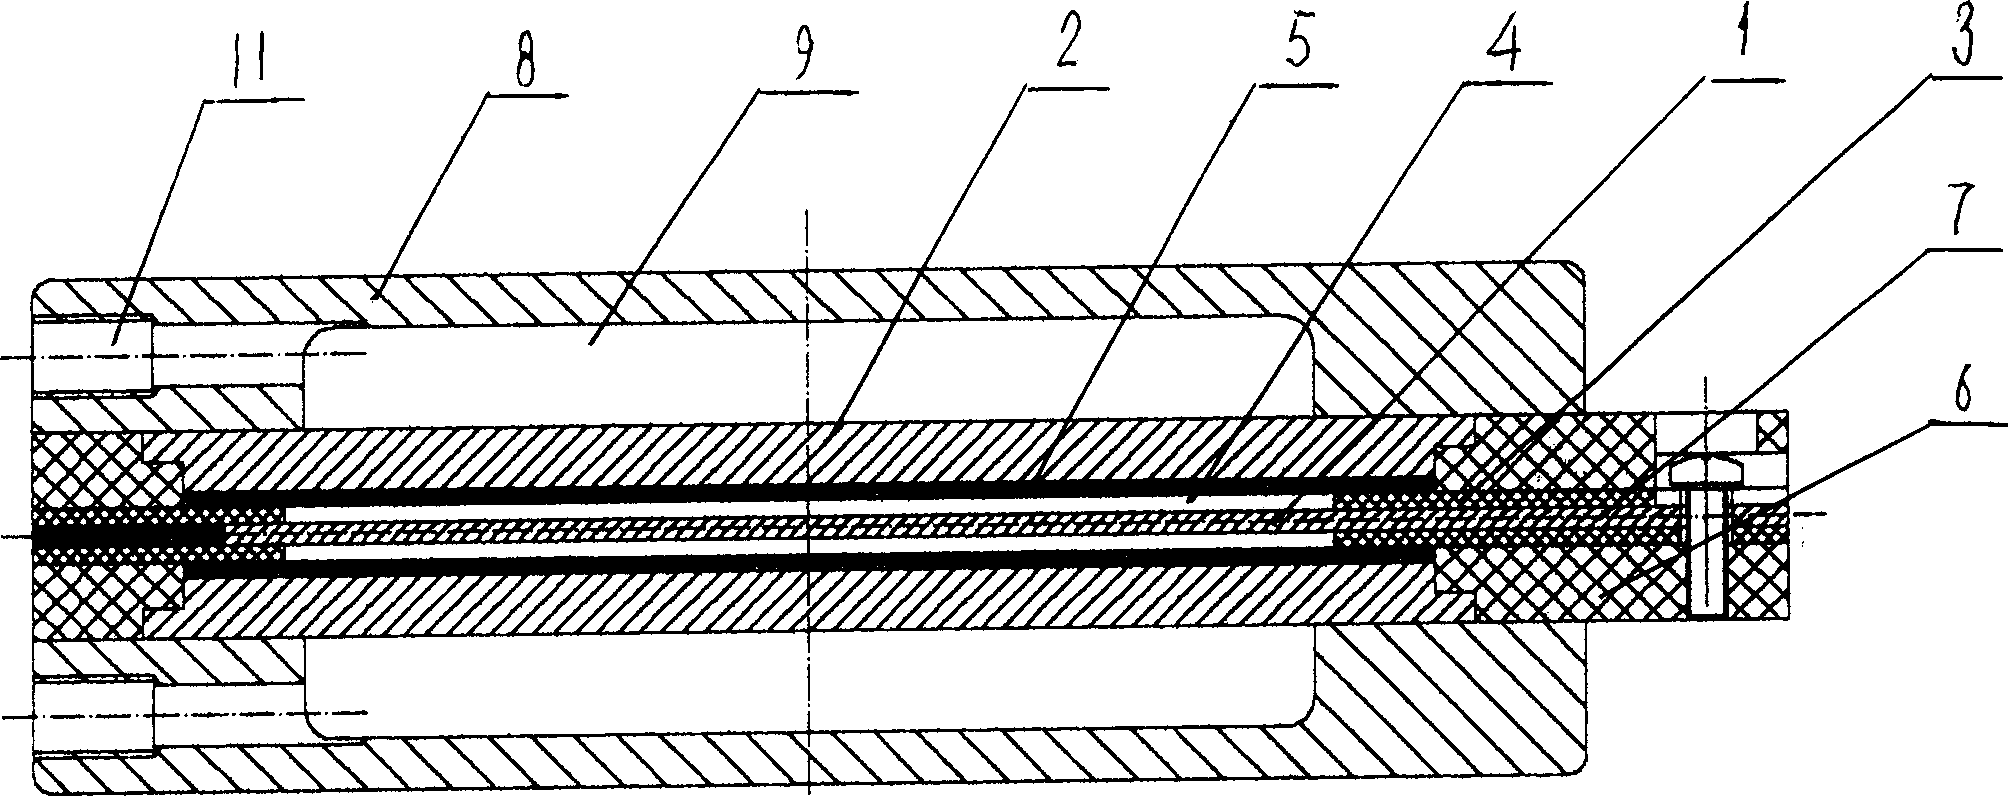 Plate-type double-side symmetrical-discharging ozone generator discharging chamber